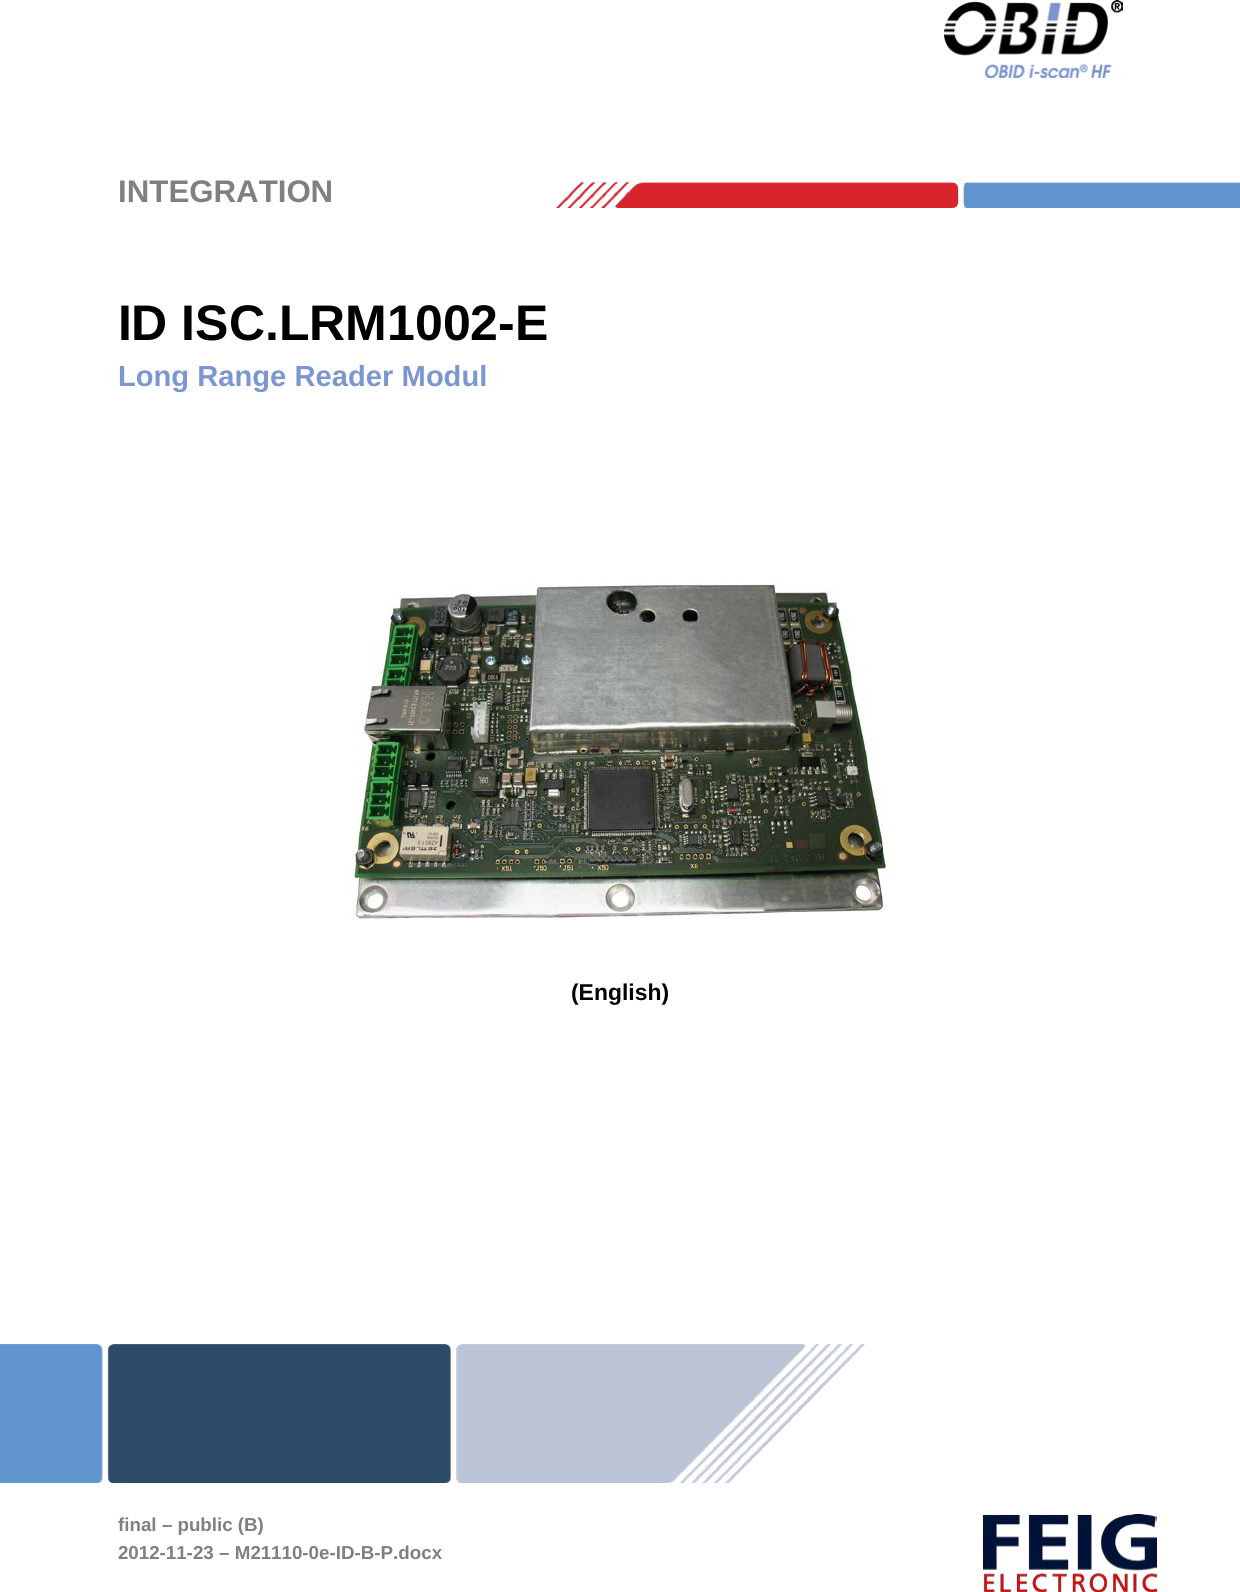    INTEGRATION   final – public (B) 2012-11-23 – M21110-0e-ID-B-P.docx   ID ISC.LRM1002-E Long Range Reader Modul      (English) 